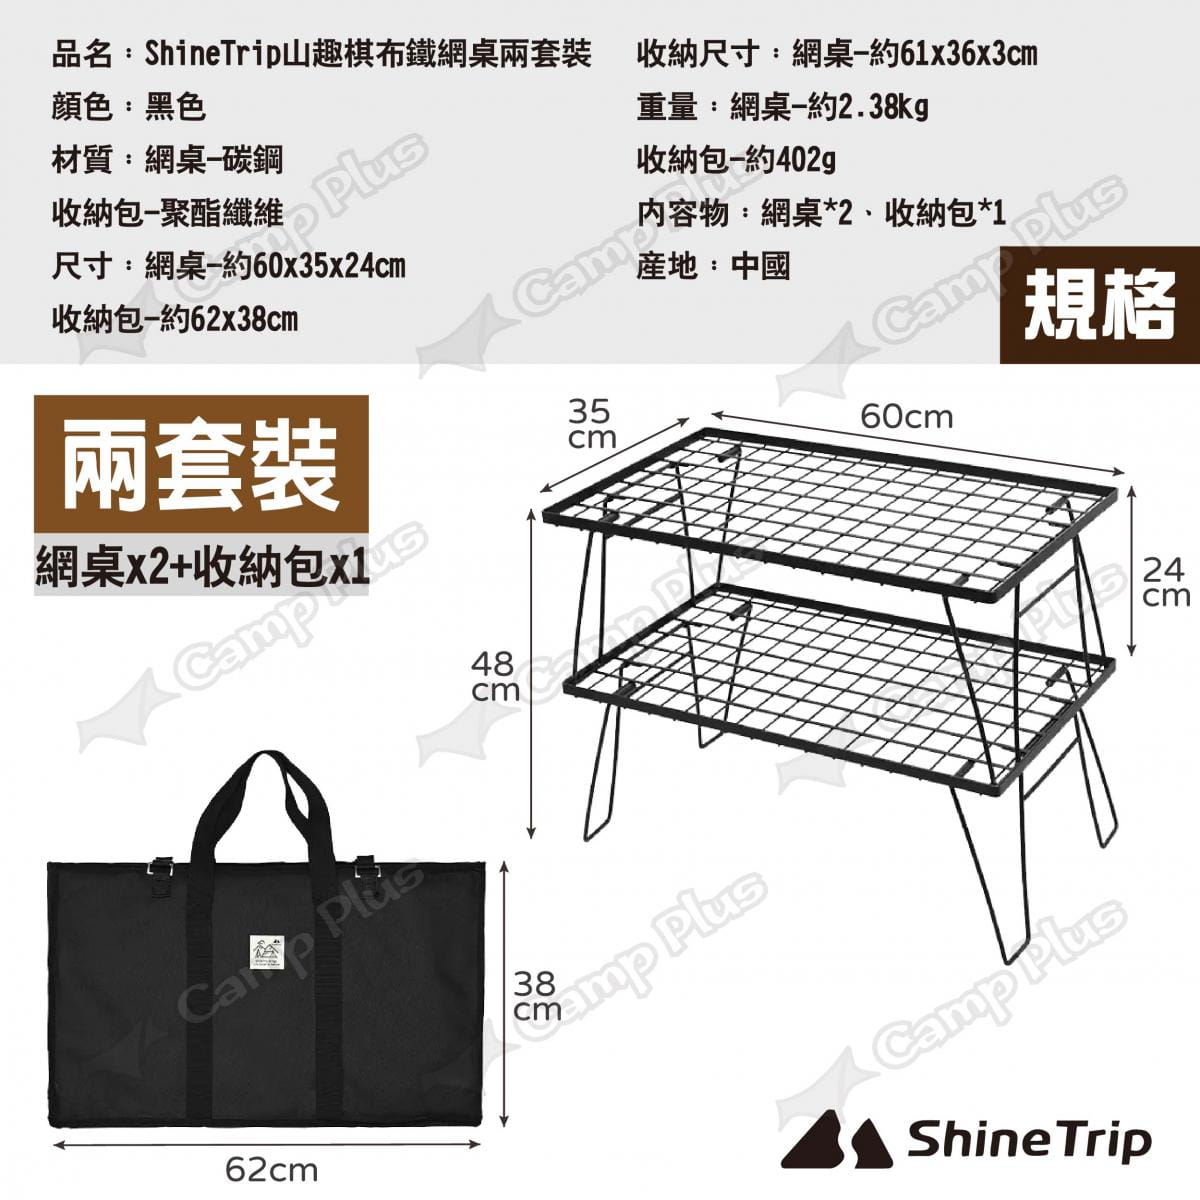 【ShineTrip山趣】棋布鐵網桌兩套裝 黑色 悠遊戶外 7